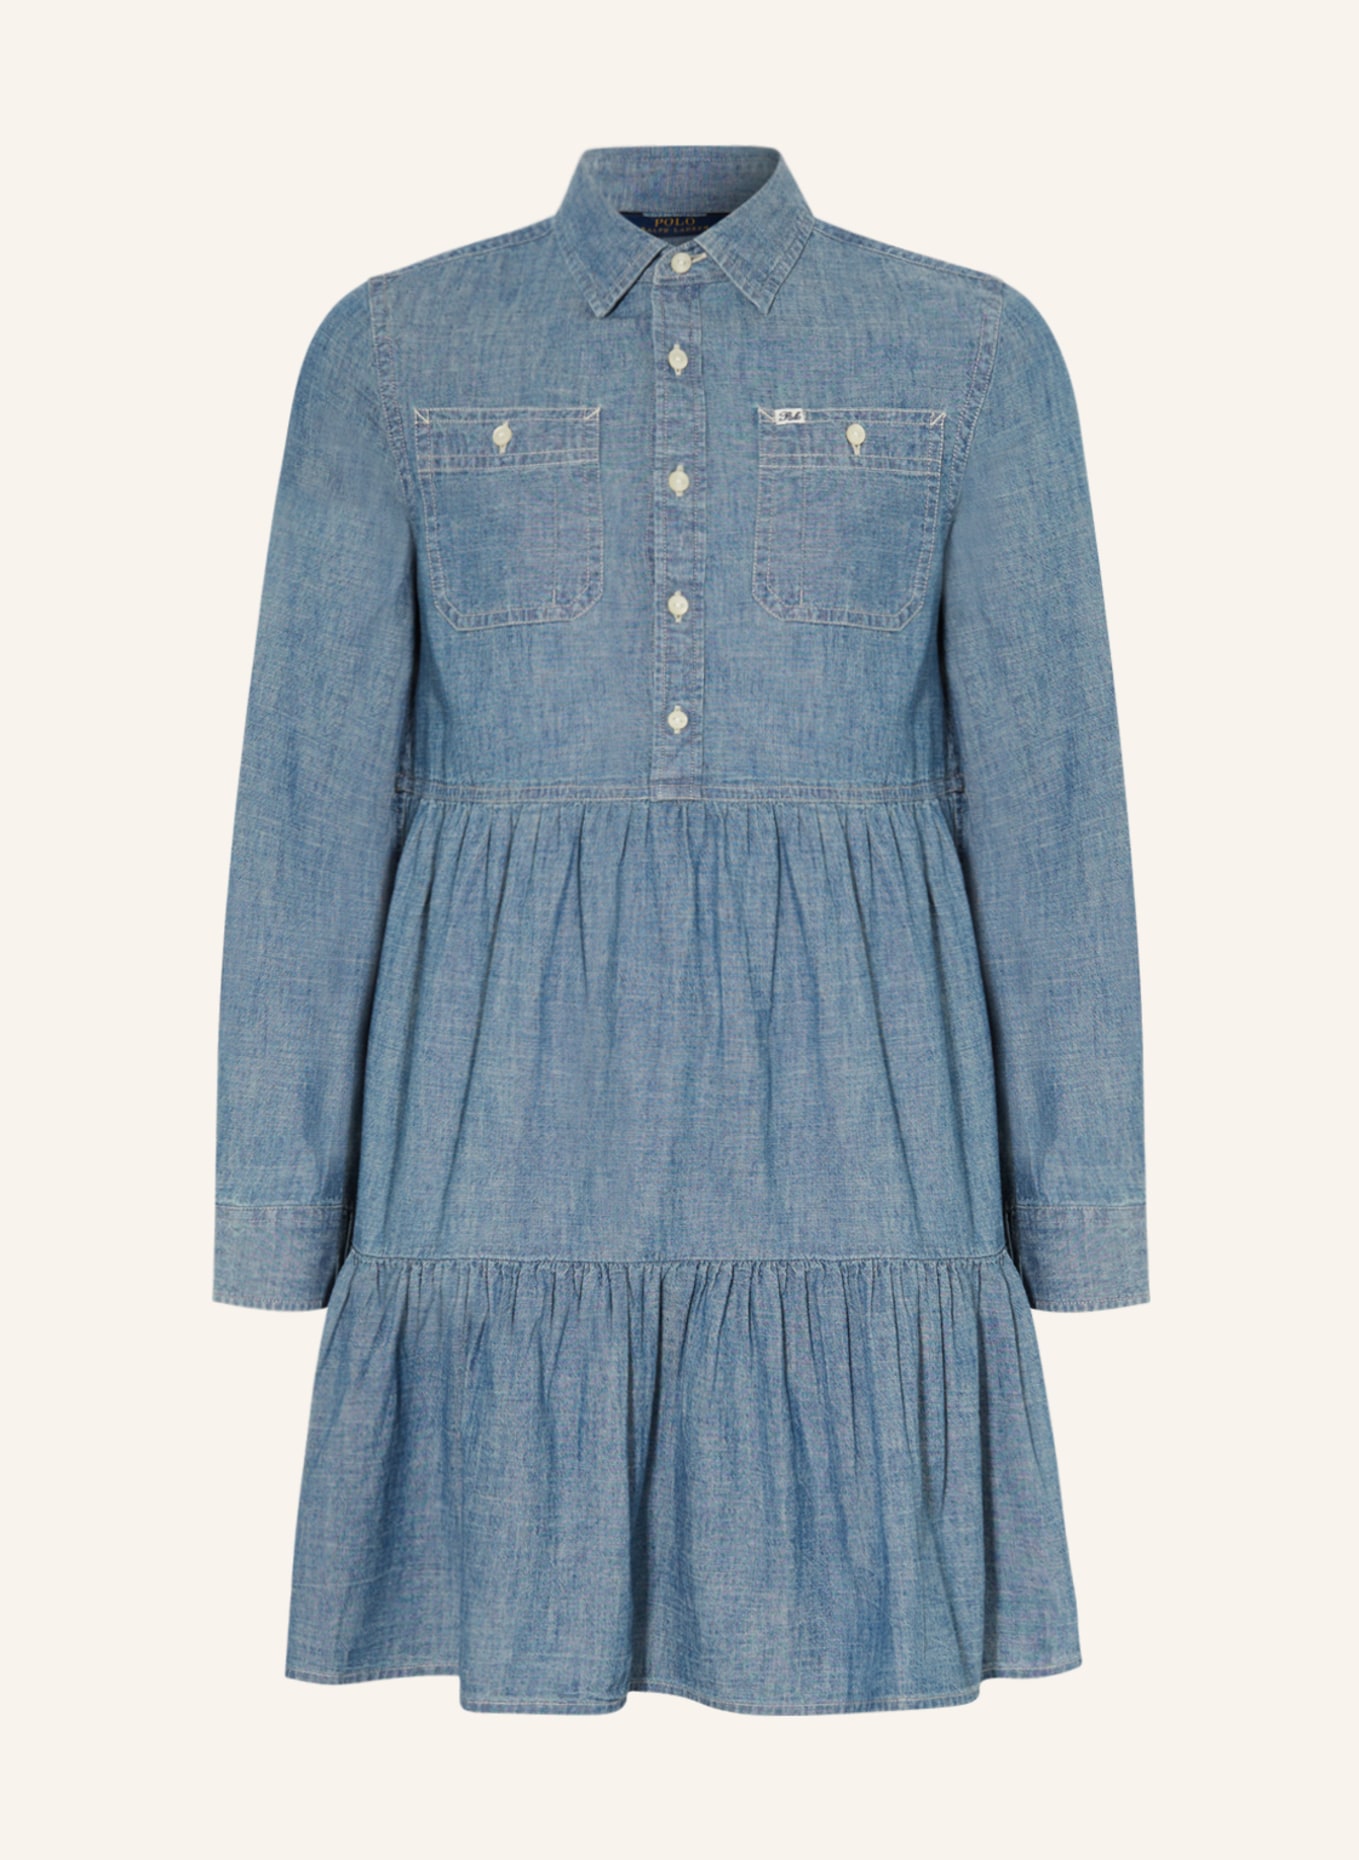 POLO RALPH LAUREN Kleid in Jeansoptik, Farbe: 001 MEDIUM BLUE WASH (Bild 1)